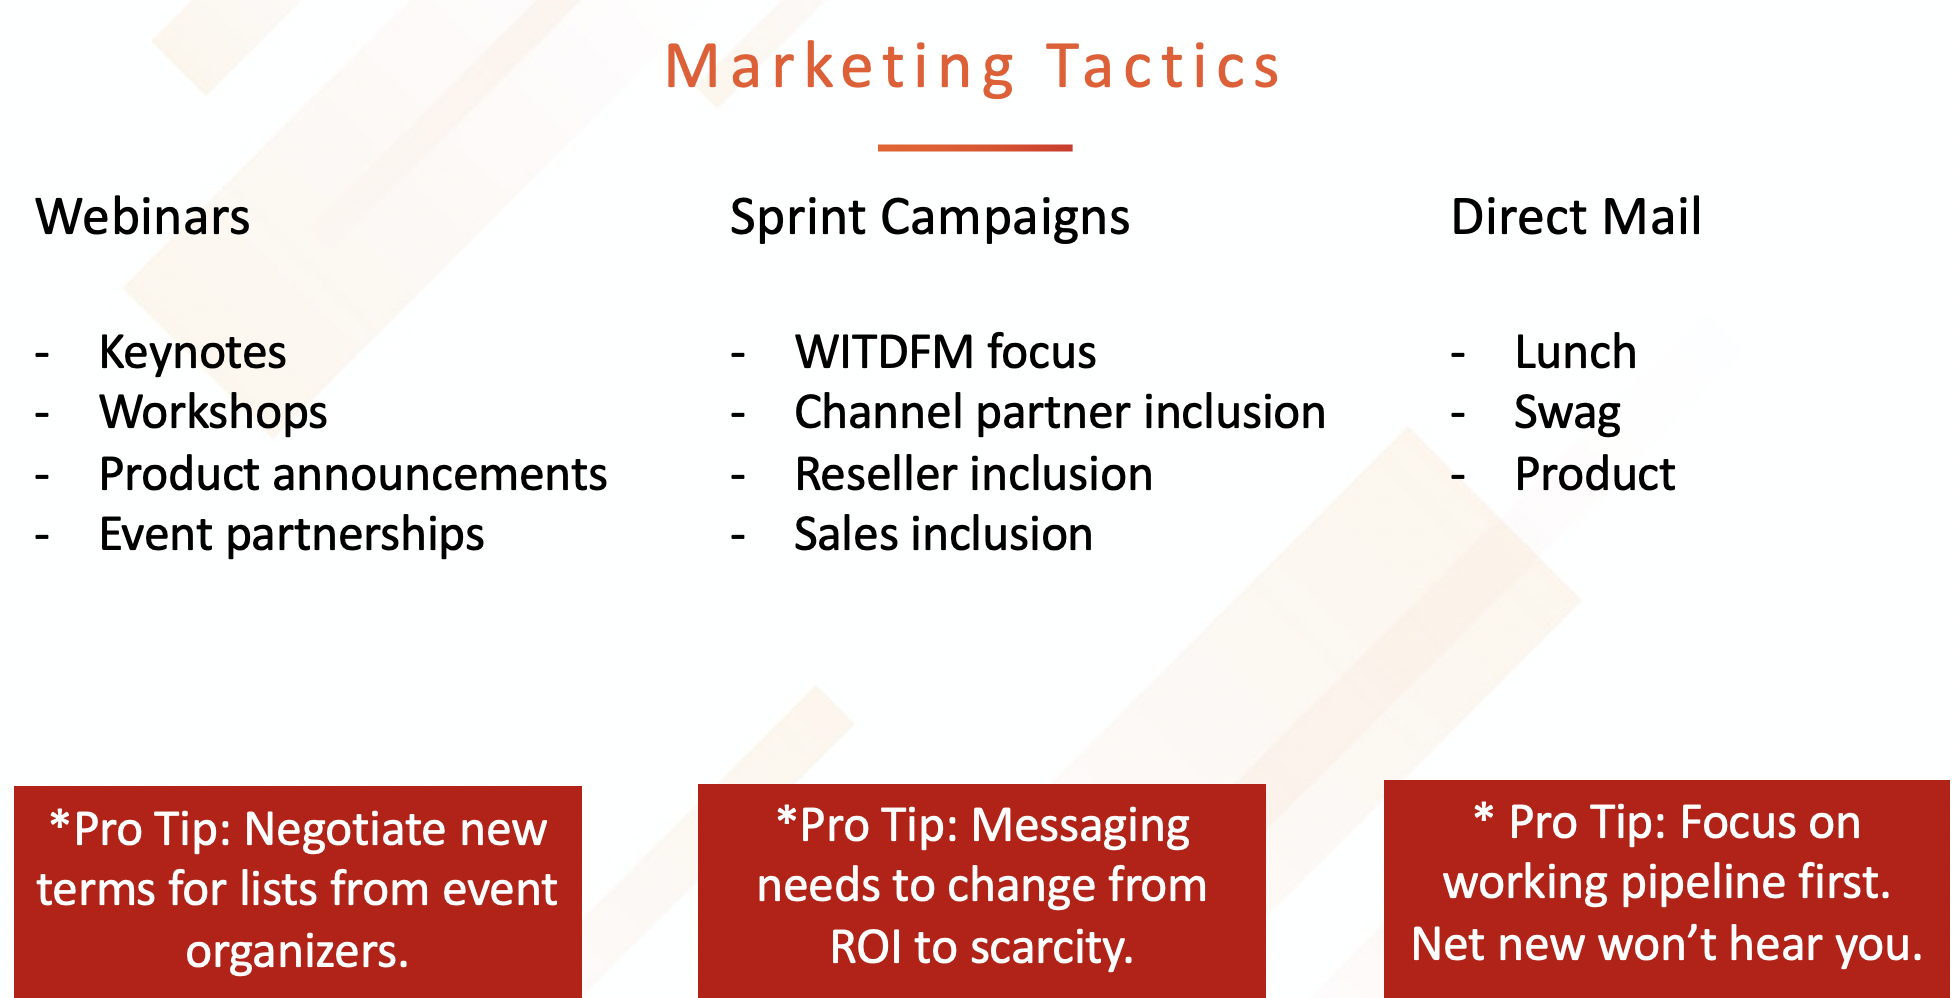 Types of Marketing Tactics